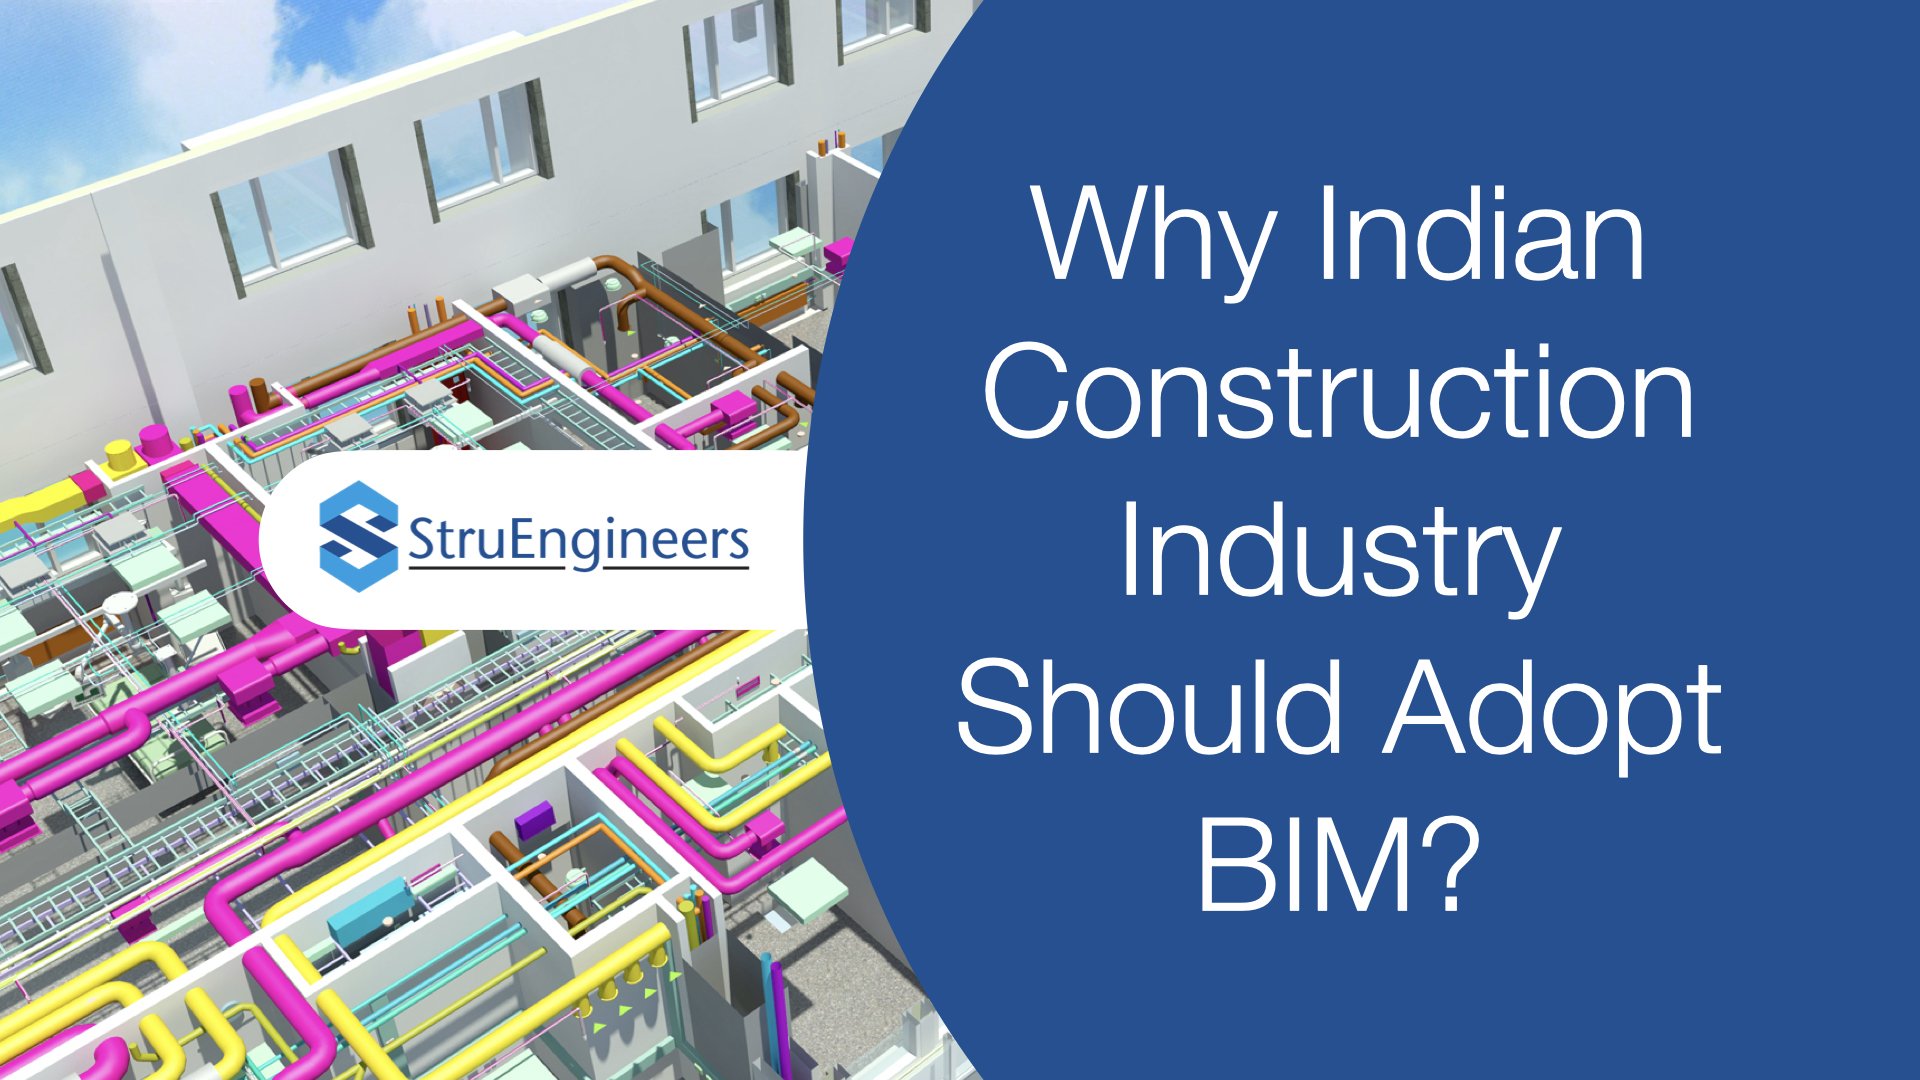 Indian Construction Industry Should Adopt BIM